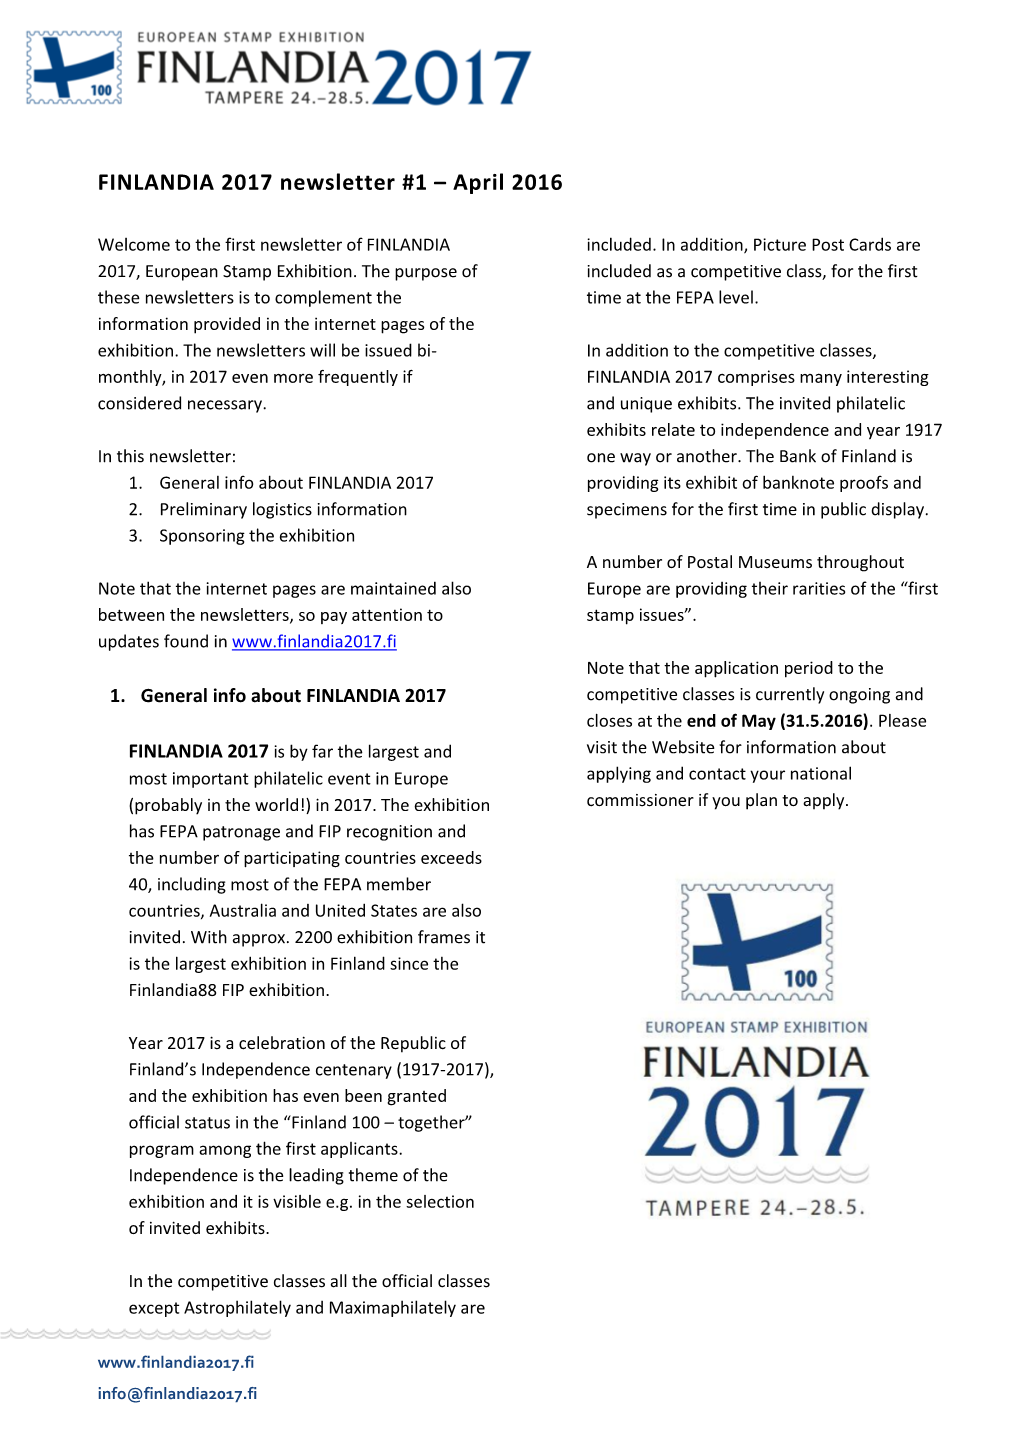 FINLANDIA 2017 Newsletter #1 – April 2016